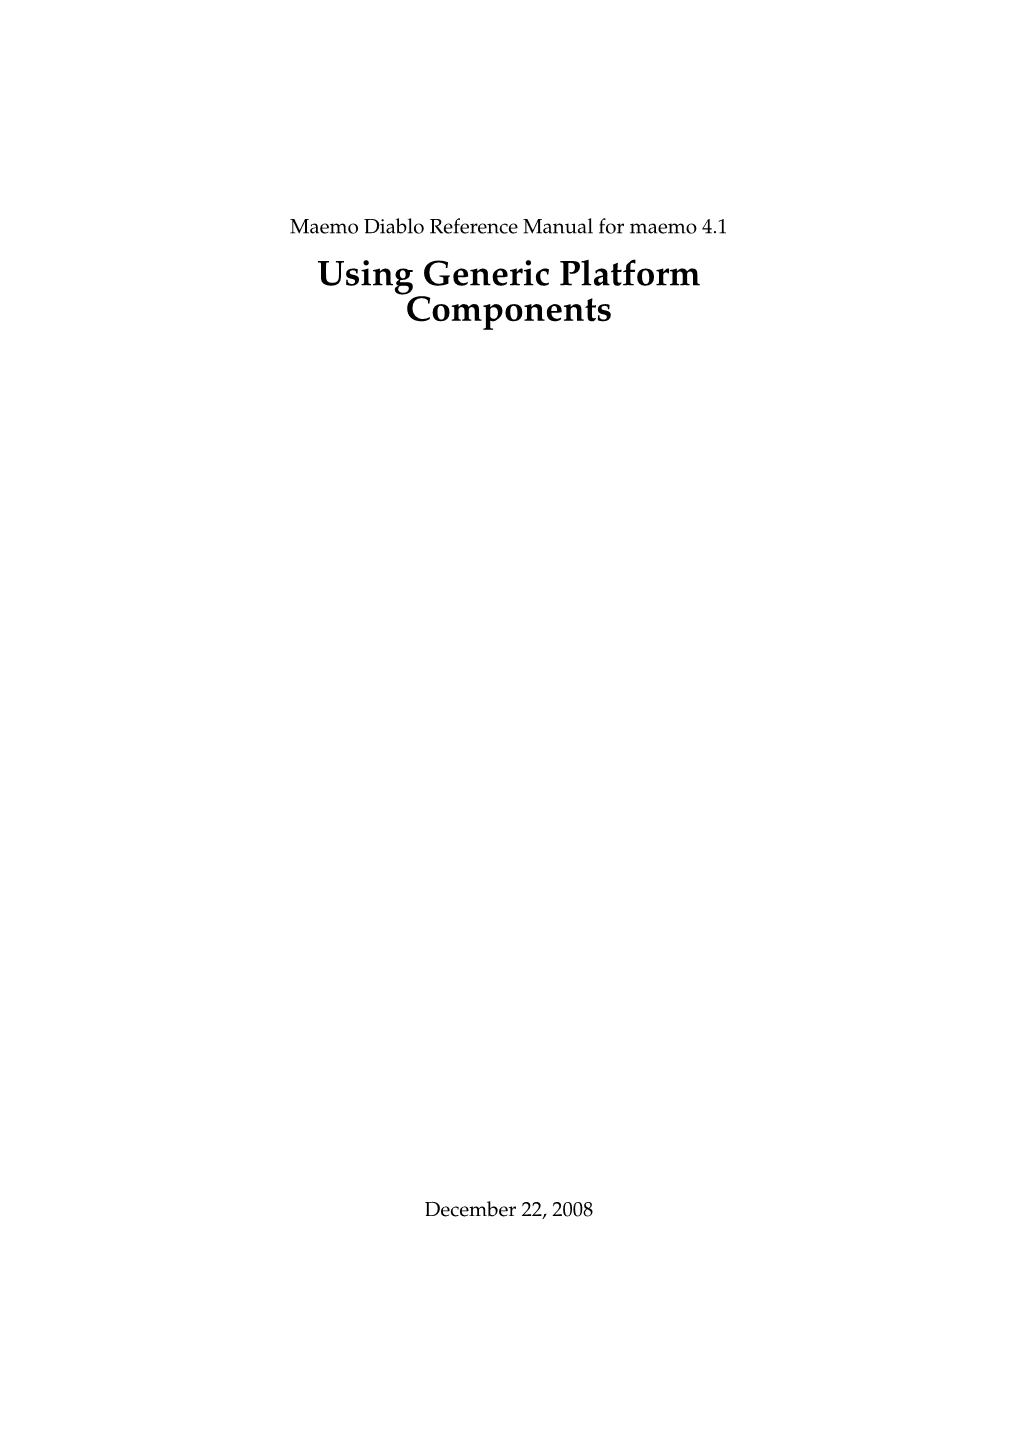 Using Generic Platform Components